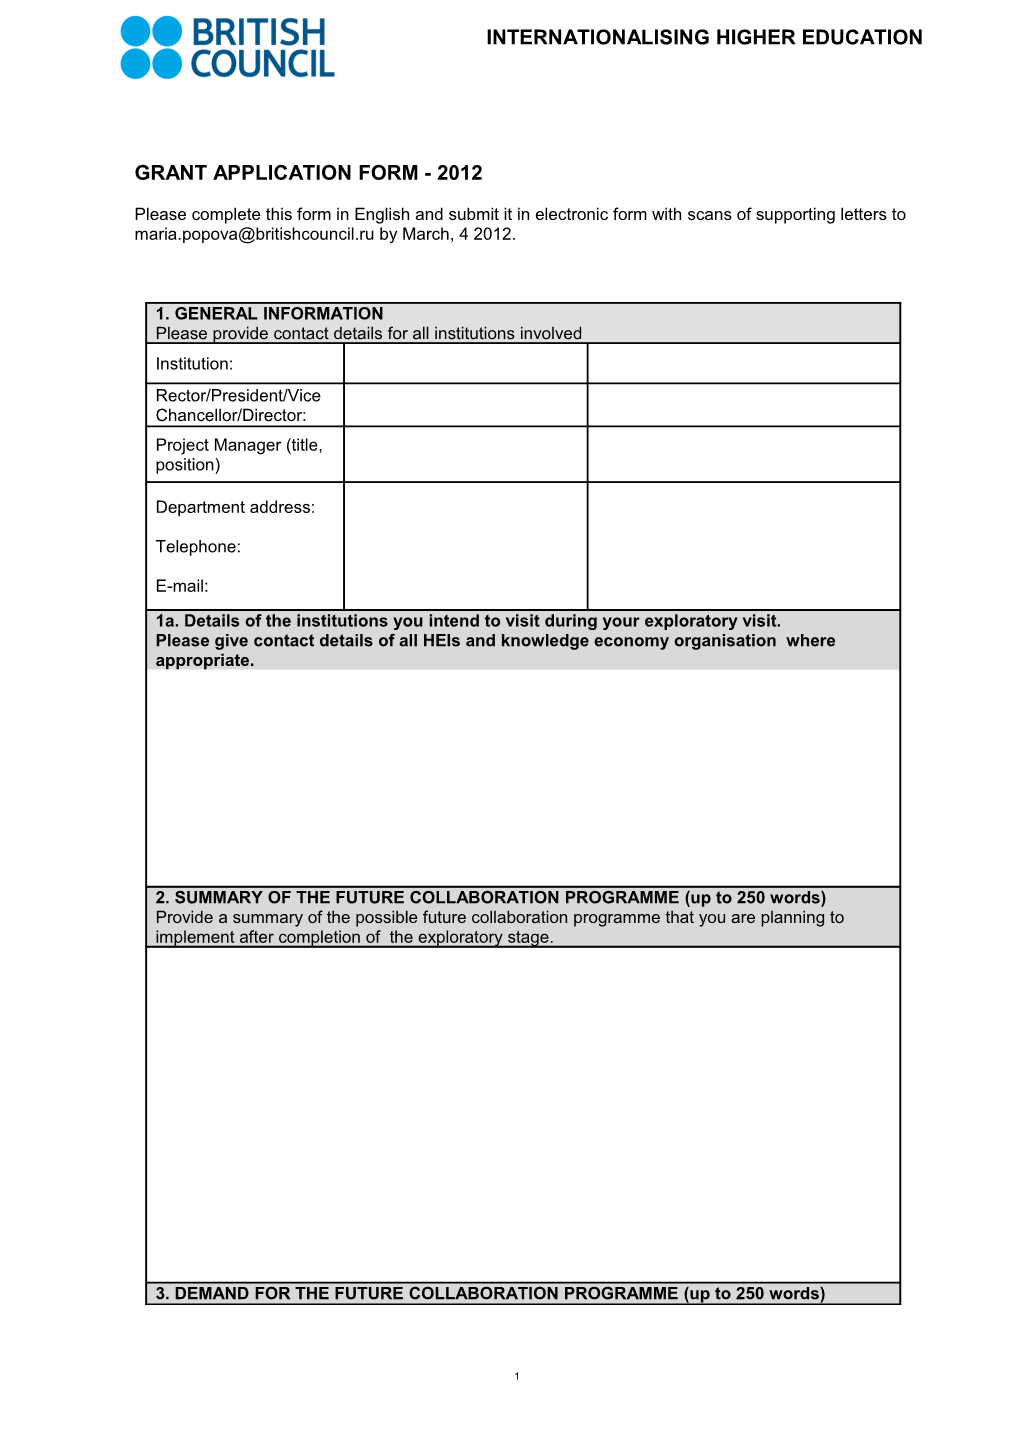 Grant Application Form- 2012